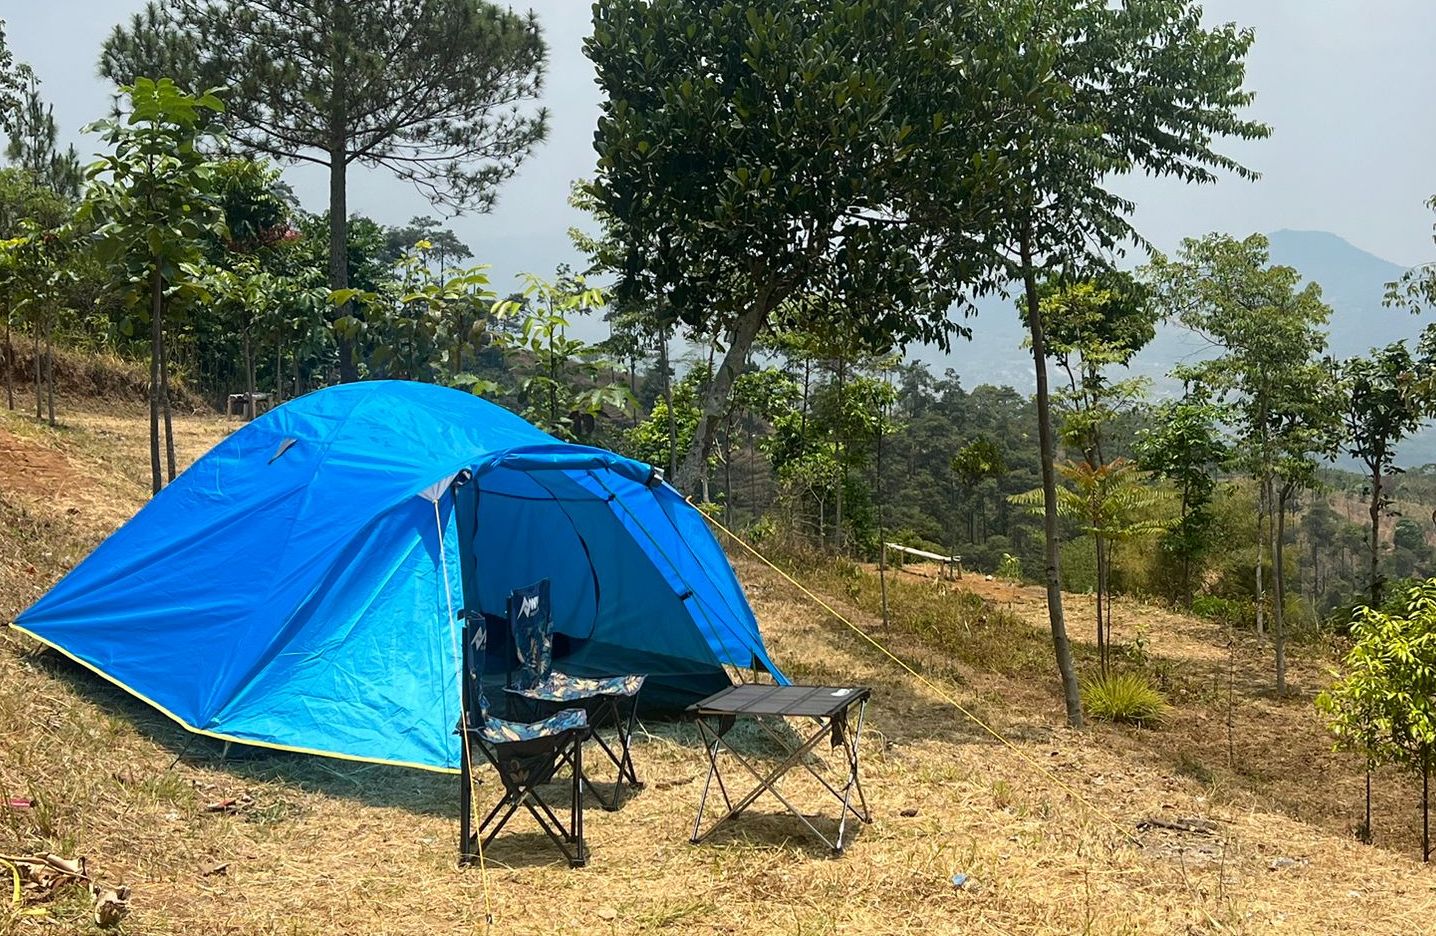 Camping ground di desa wisata Cibiru Wetan